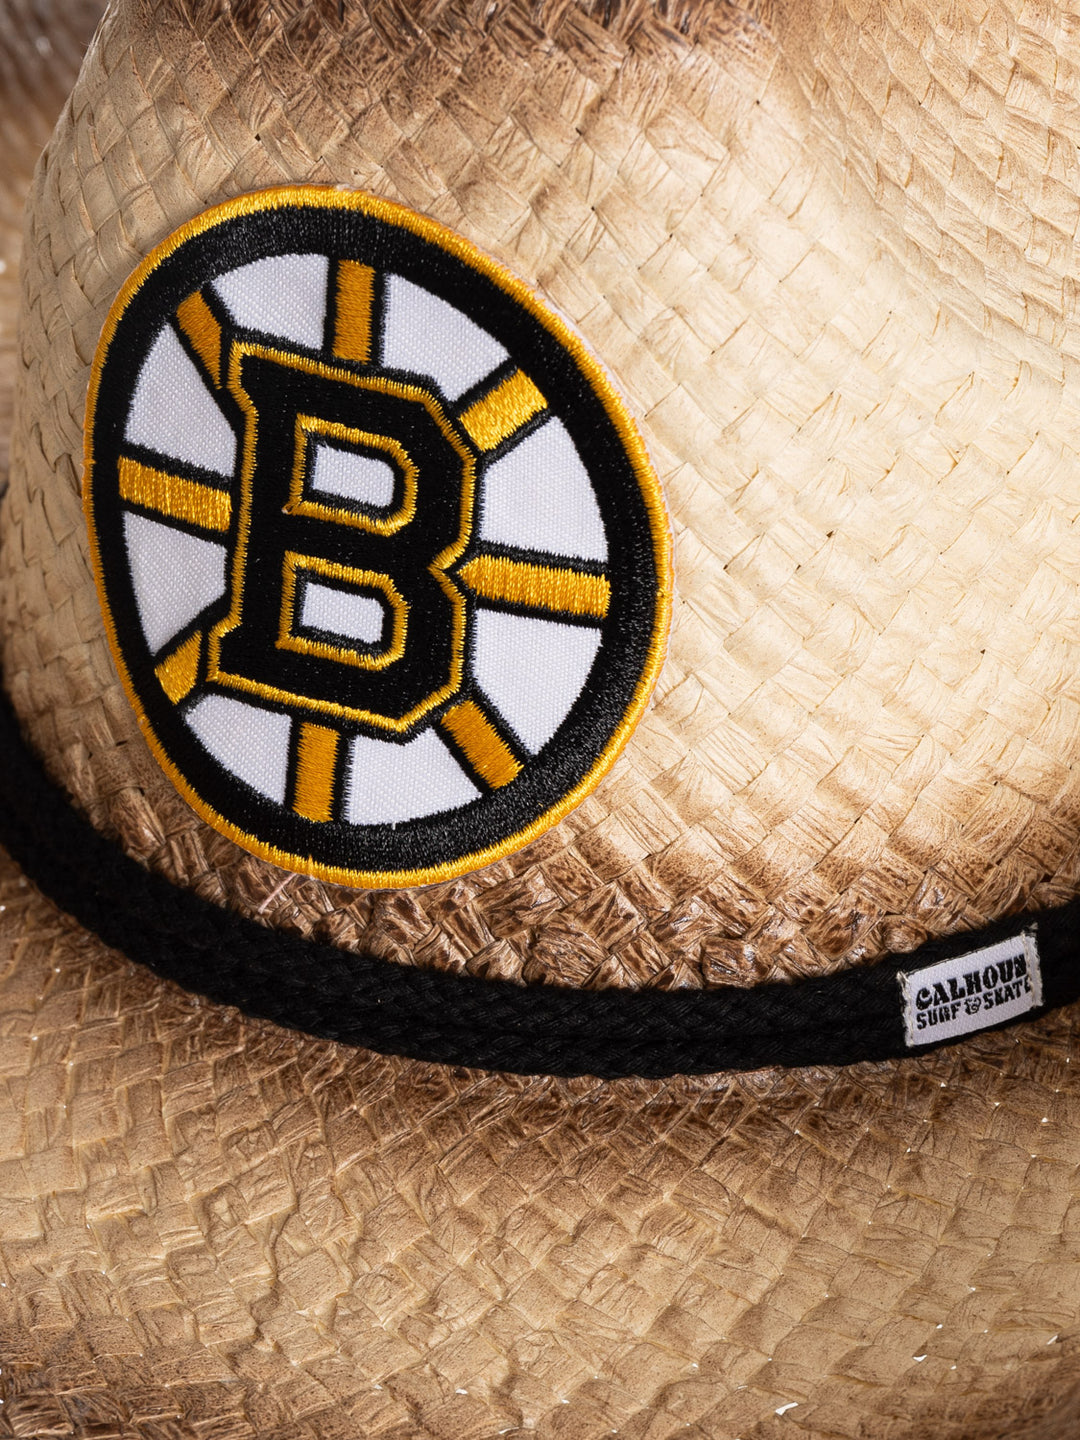 Official Licensed NHL Boston Bruins Cowboy Hat